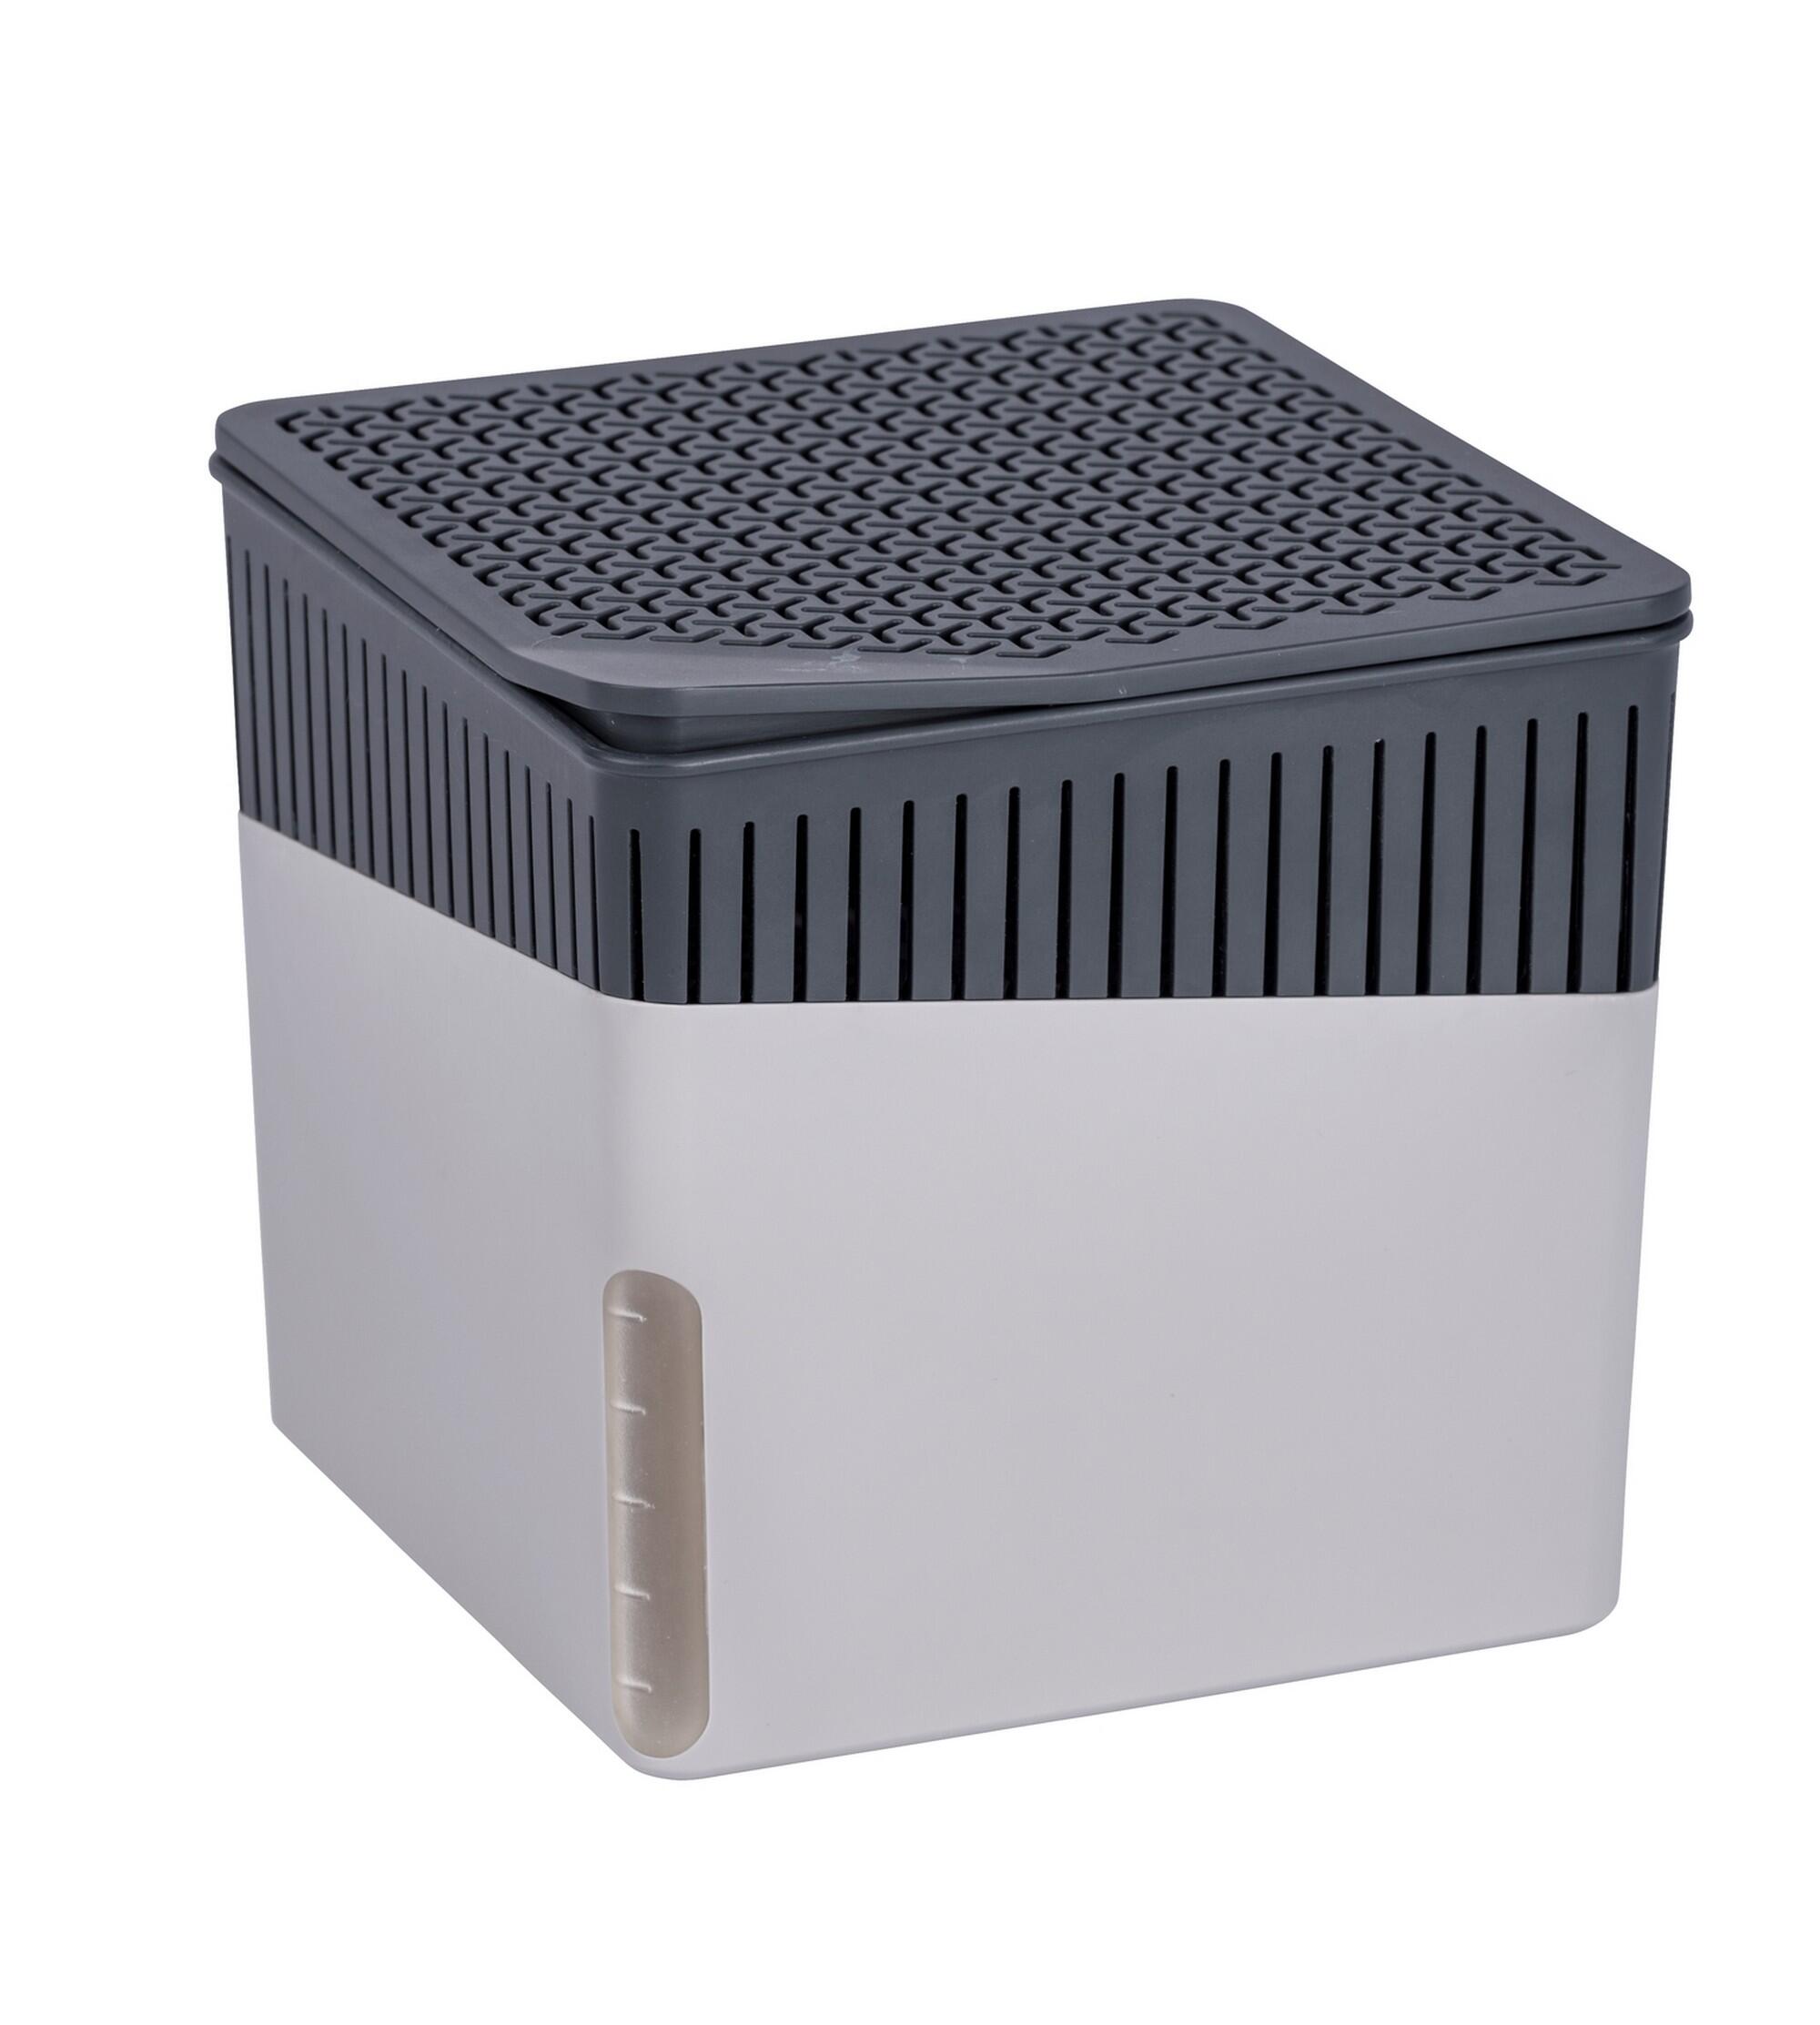 Deshumidificador cube gris claro wenko 500 grs.